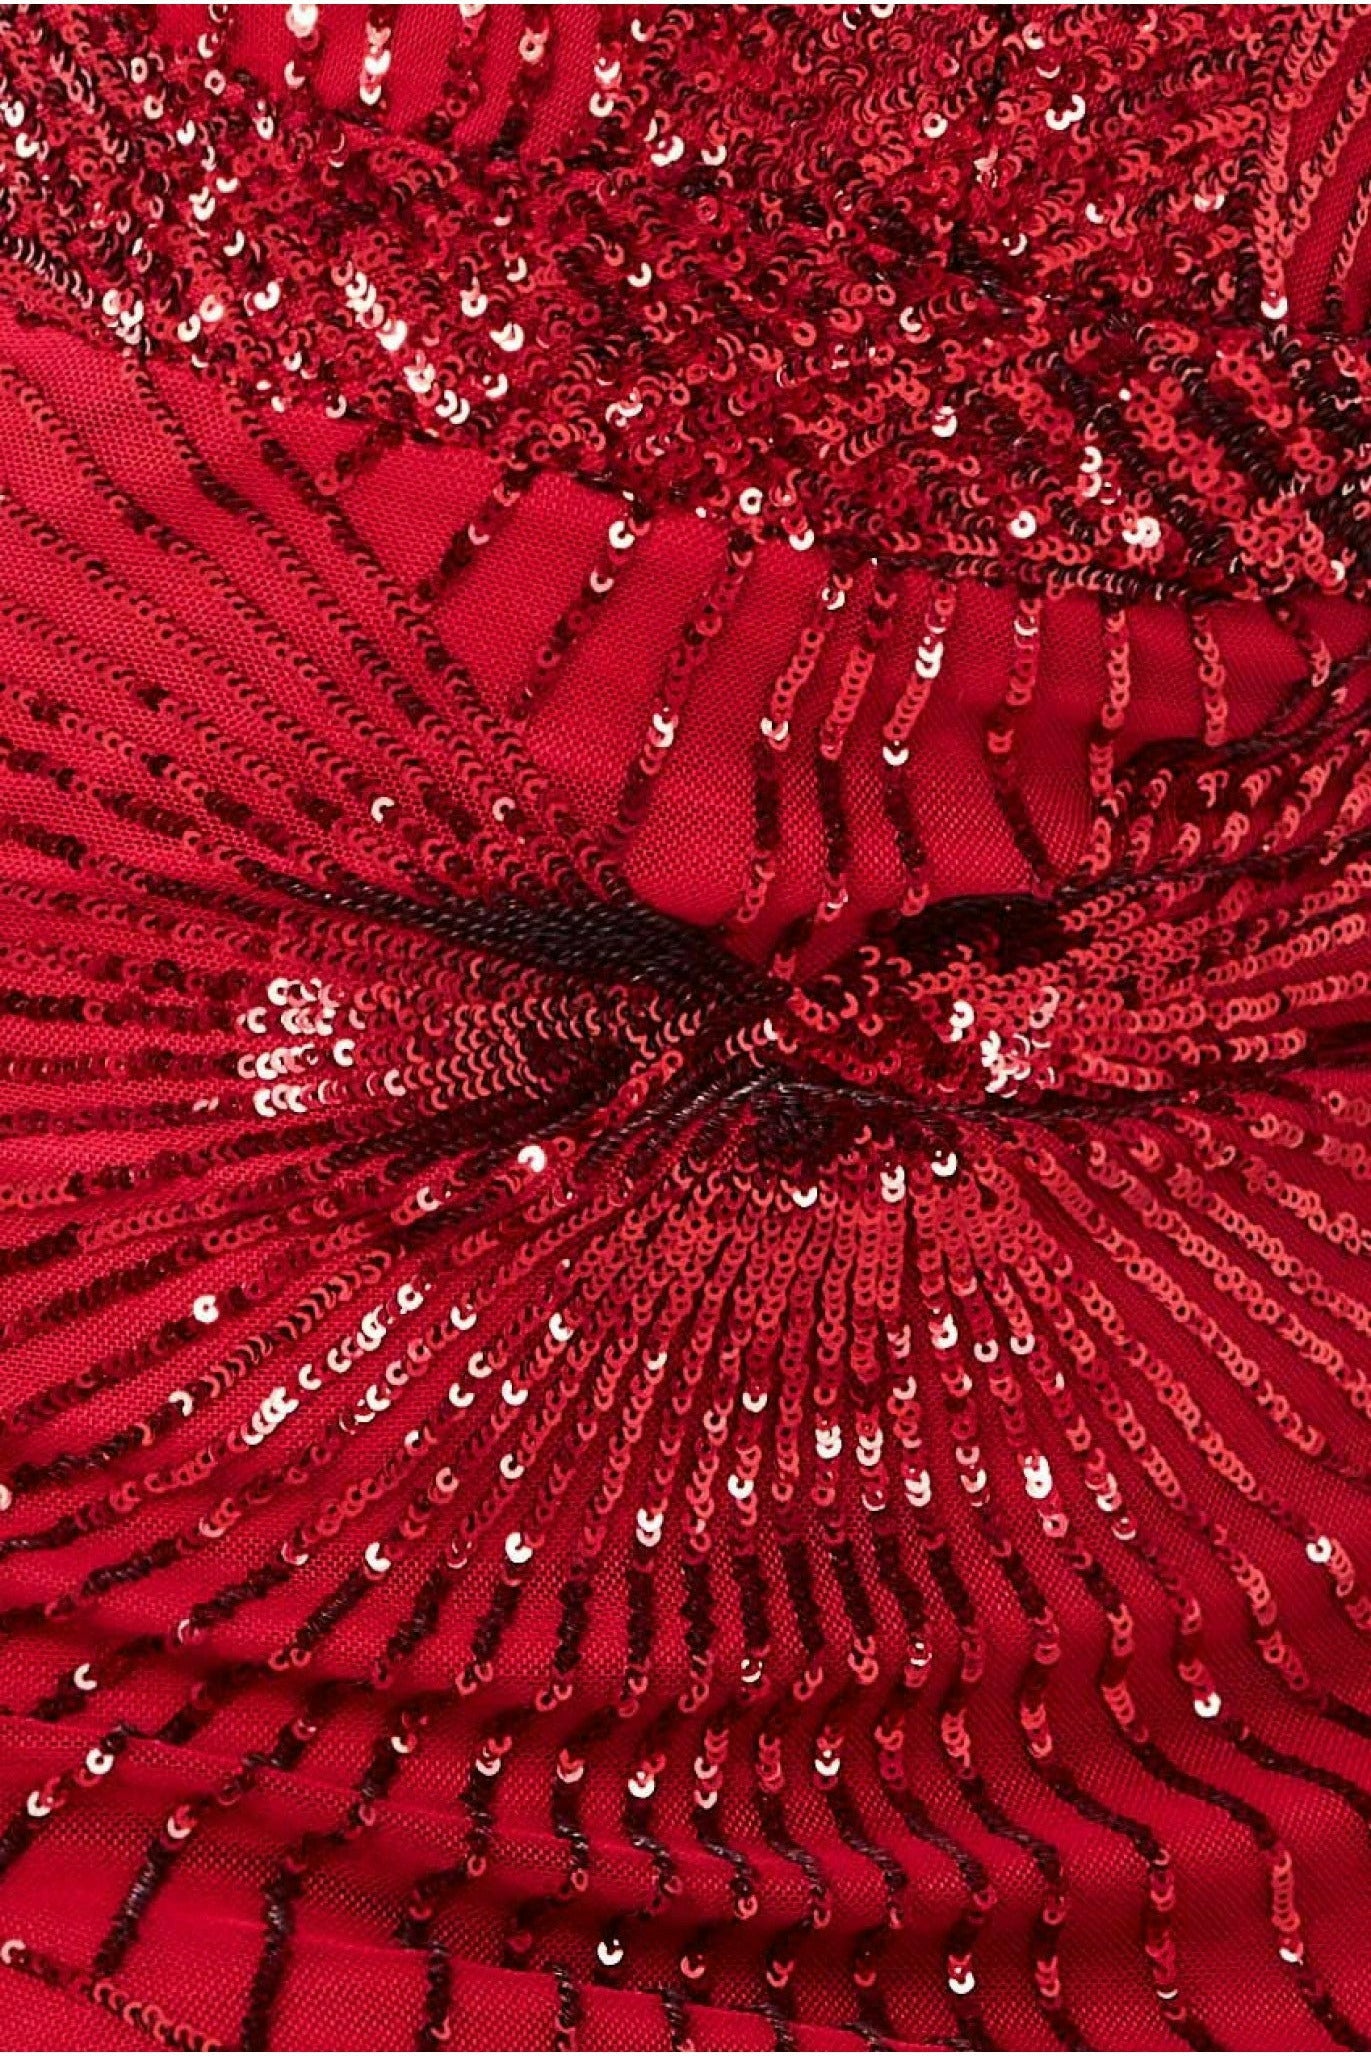 Starburst Effect Maxi Dress - Red